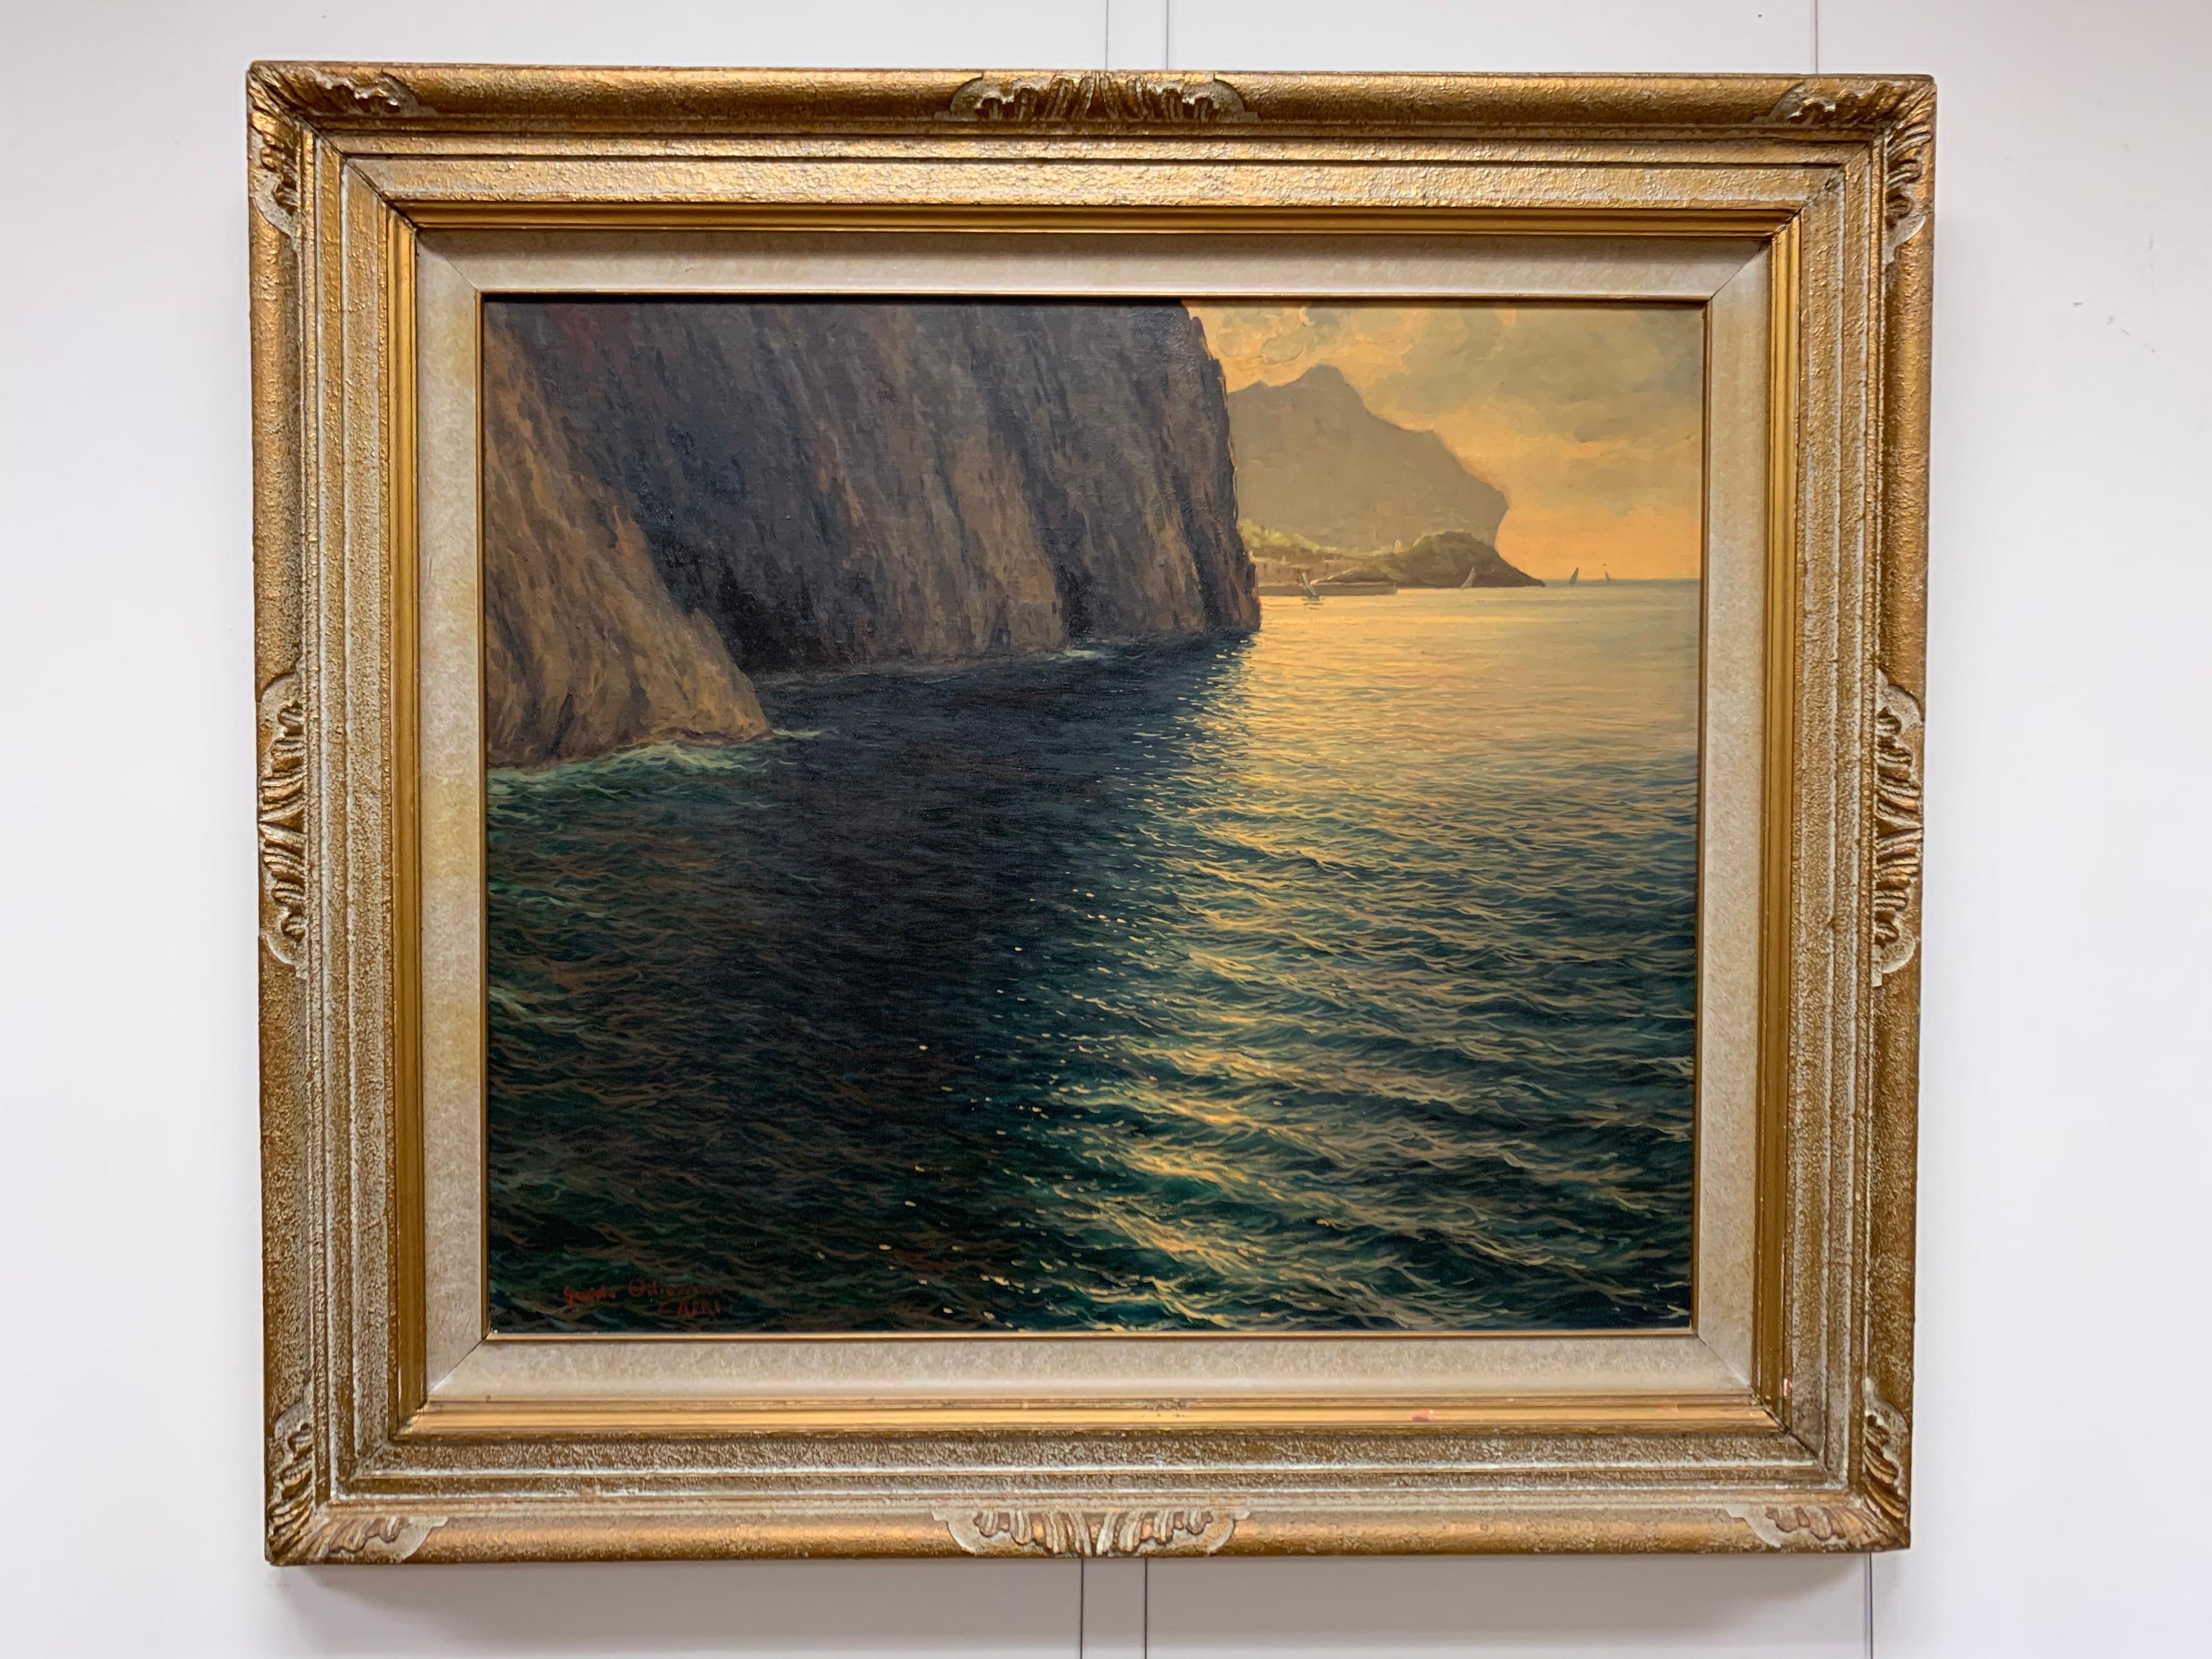 Original Signed Guido Odierna “Capri” Oil on Canvas Seascape 3